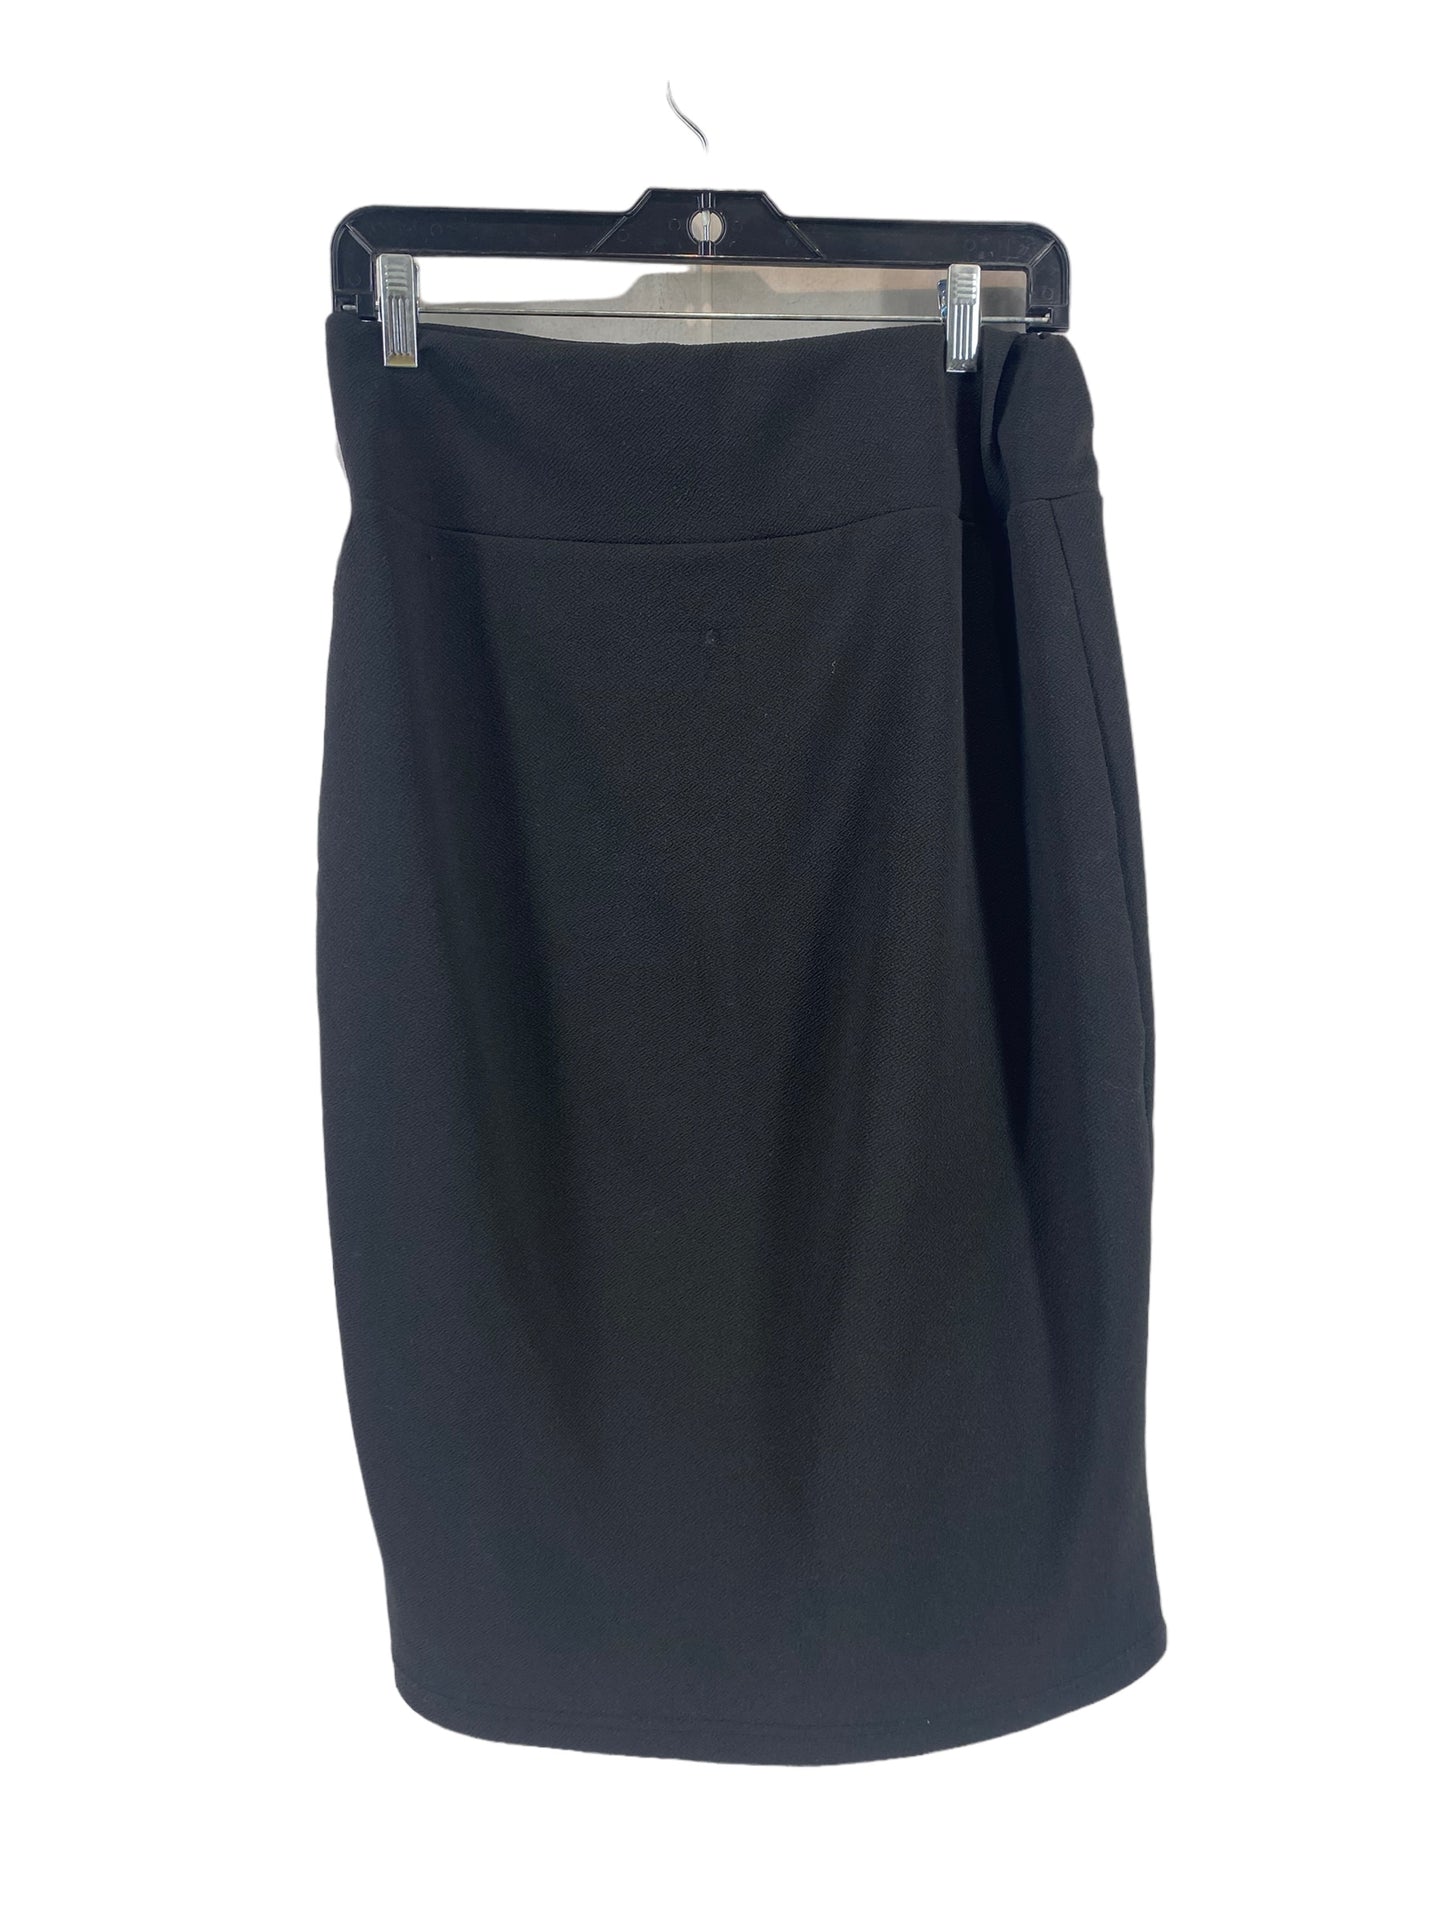 Skirt Midi By Shein  Size: L